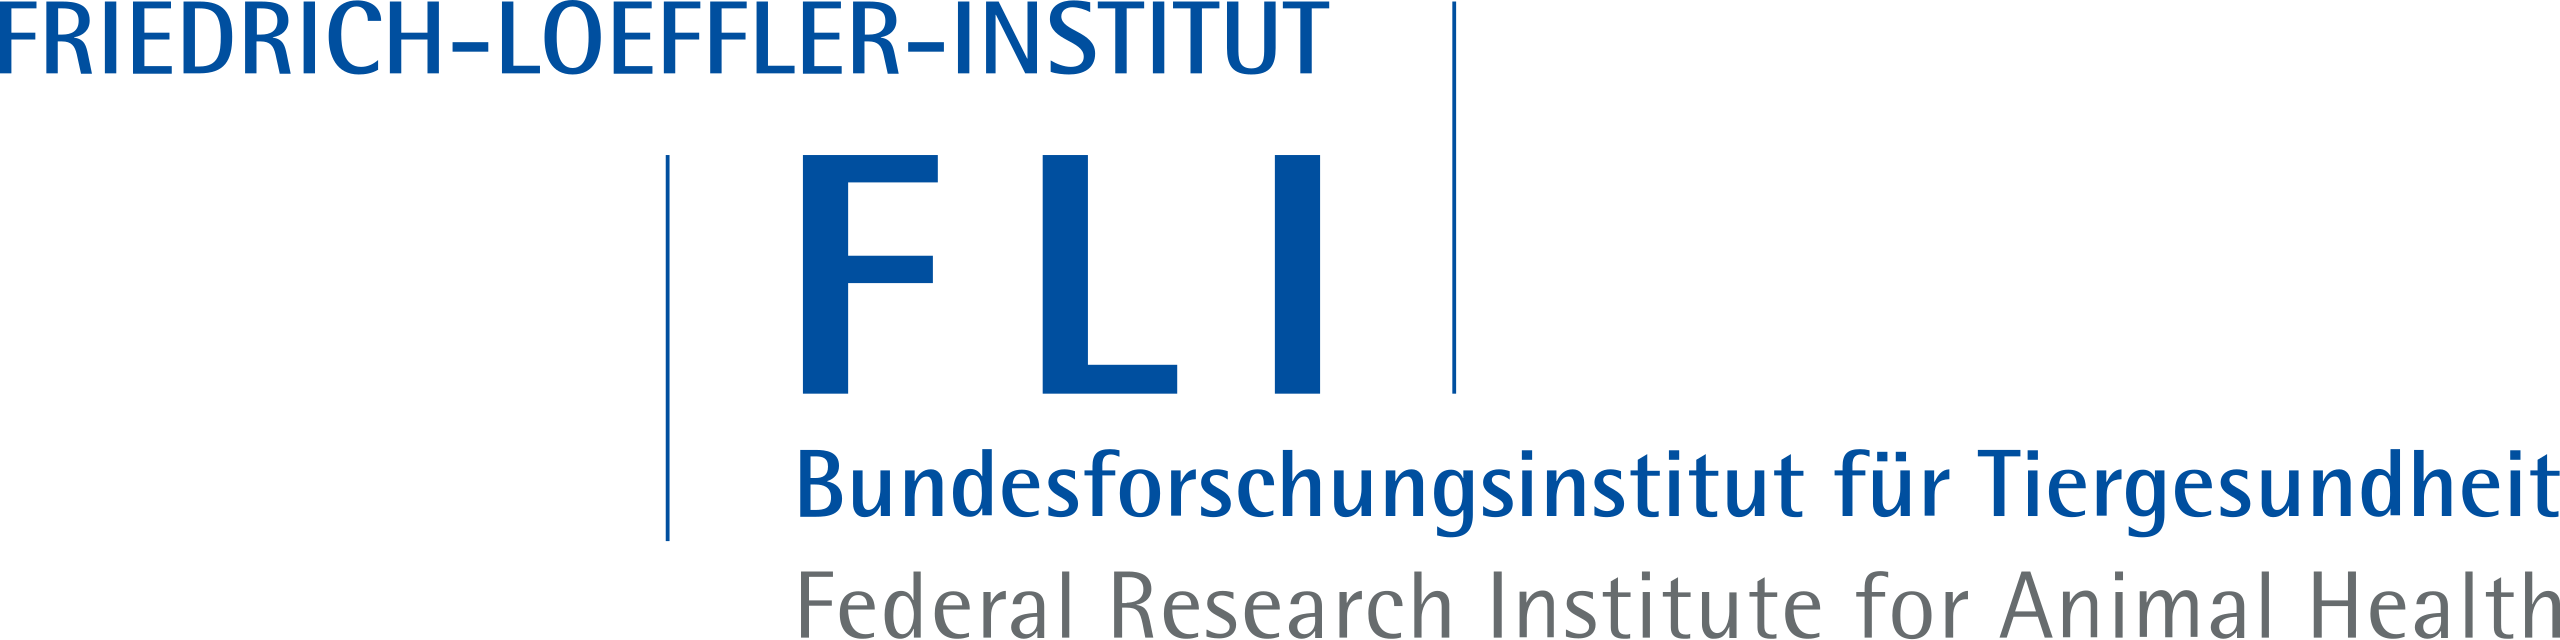 Friedrich-Loeffler-Institut_Logo_01.2021.svg.png